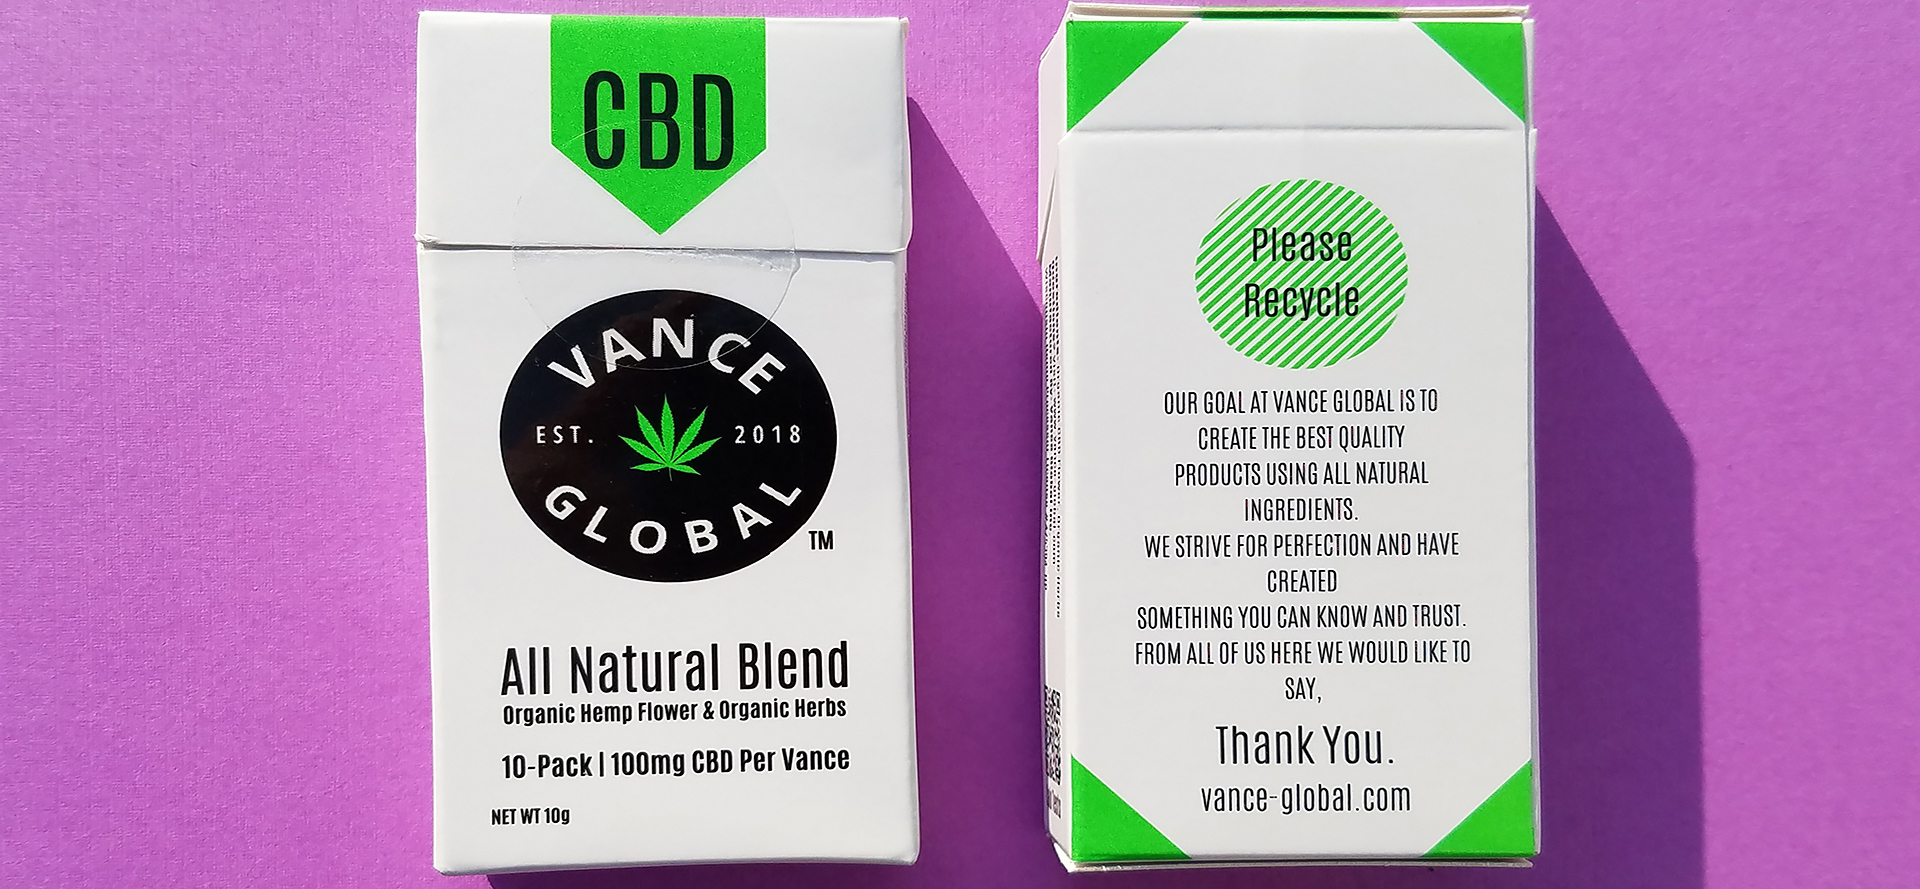 Best natural blend CBD Cigarettes packs.